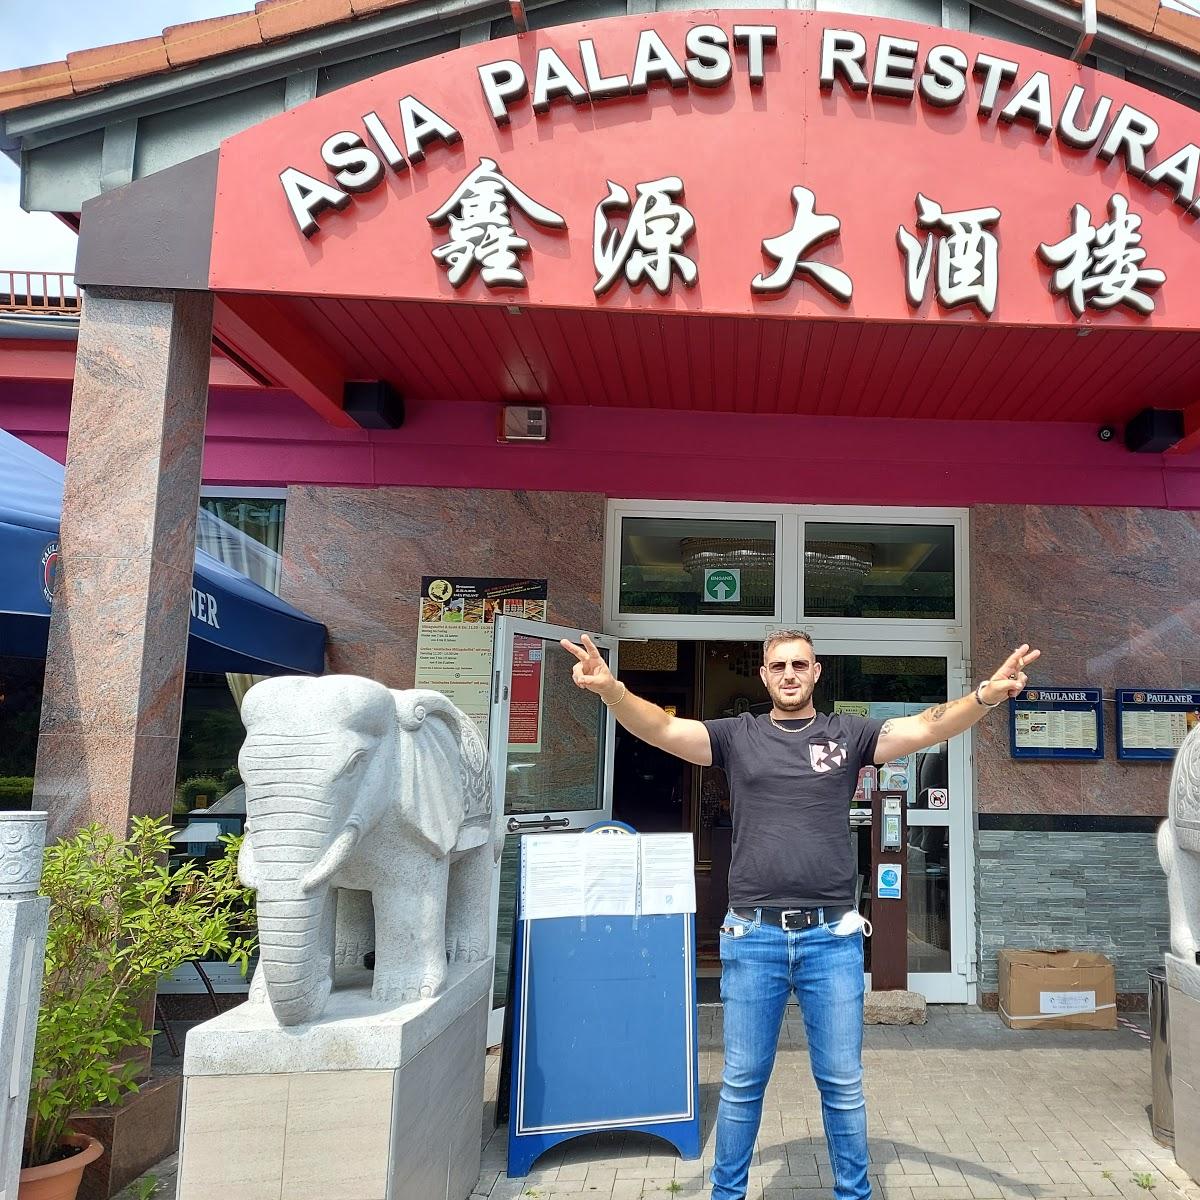 Restaurant "Asia Palast" in  Bischberg